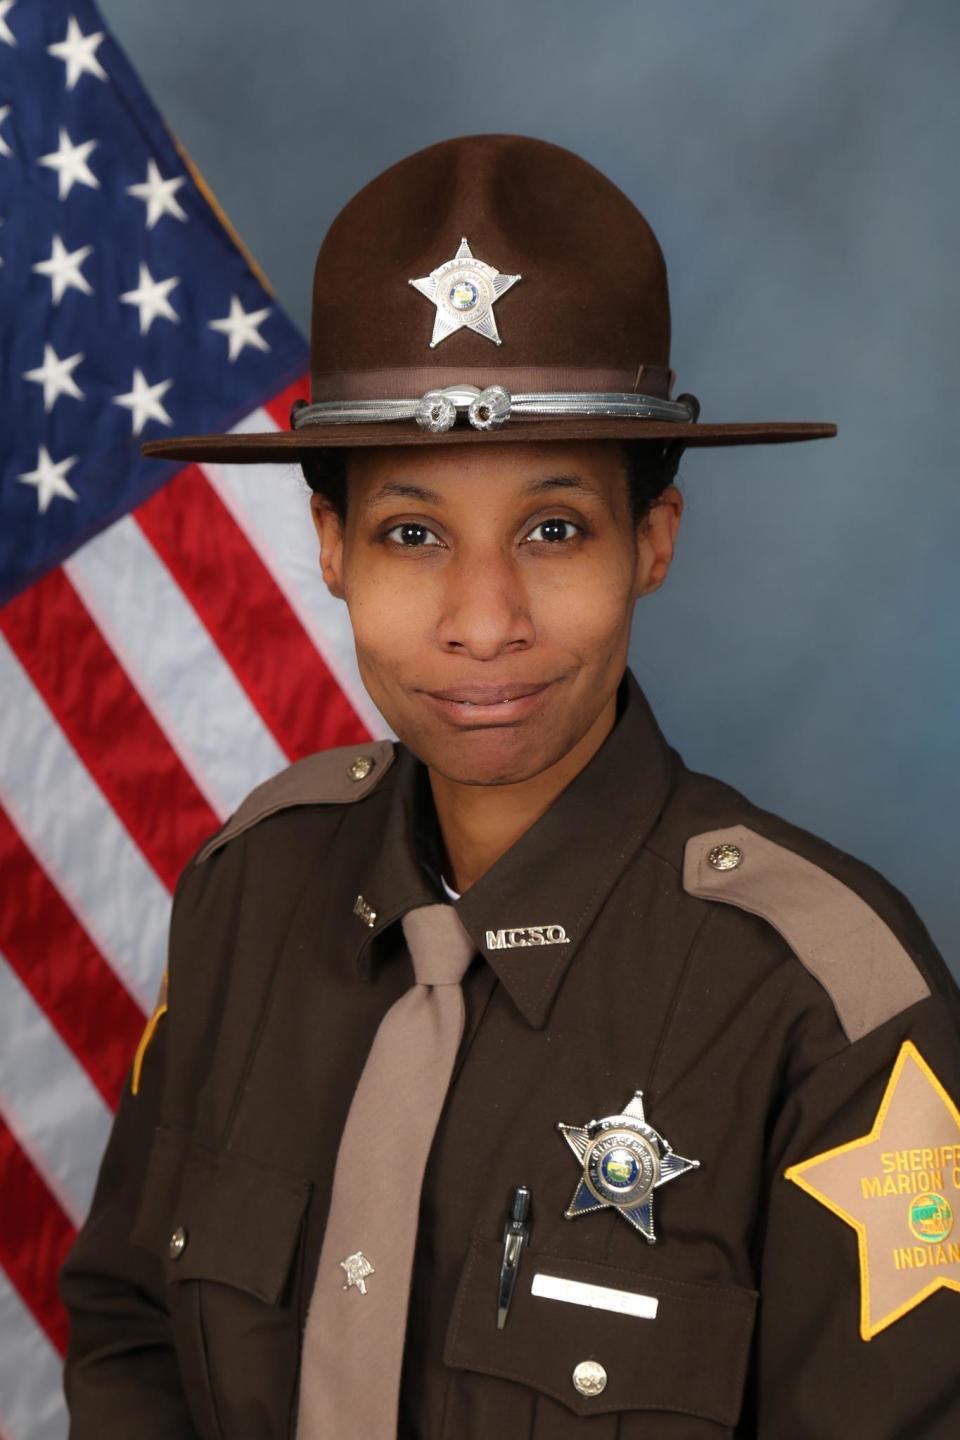 Deputy Tamieka White / Credit: Marion County Sheriff's Office